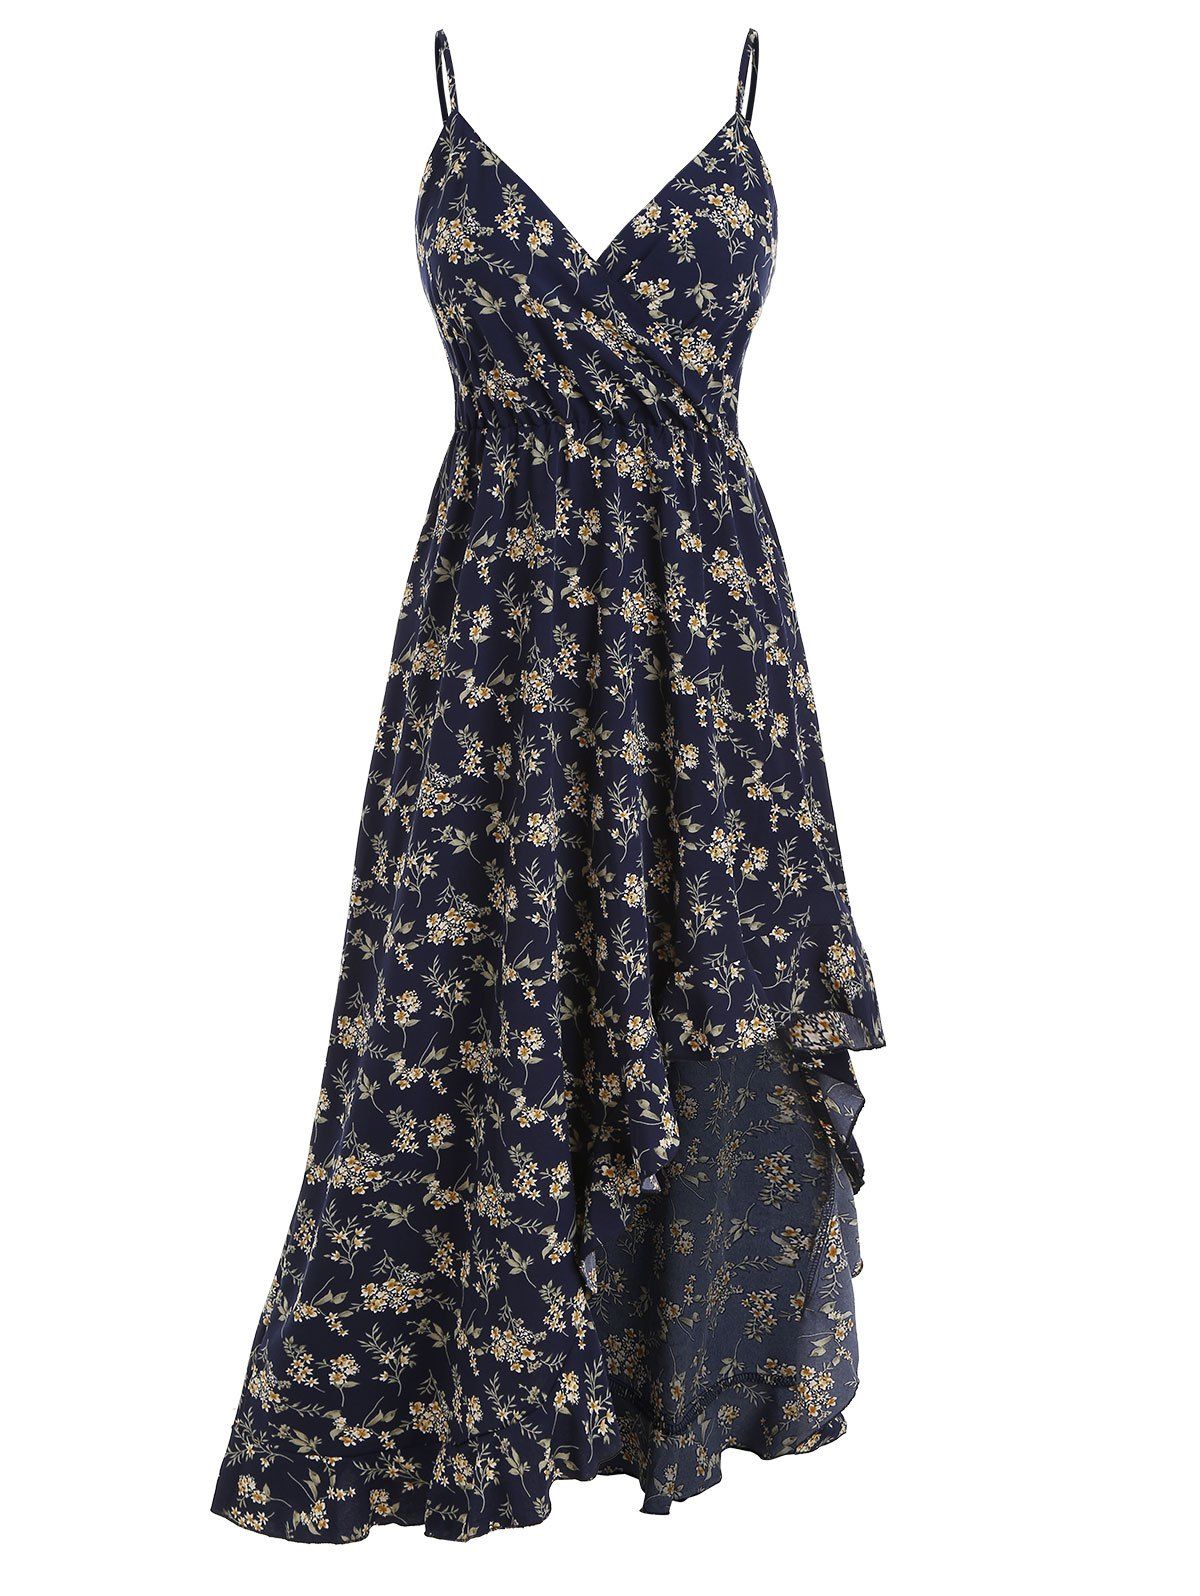 Floral Flounce Asymmetrical Surplice Cami Dress - DEEP BLUE M